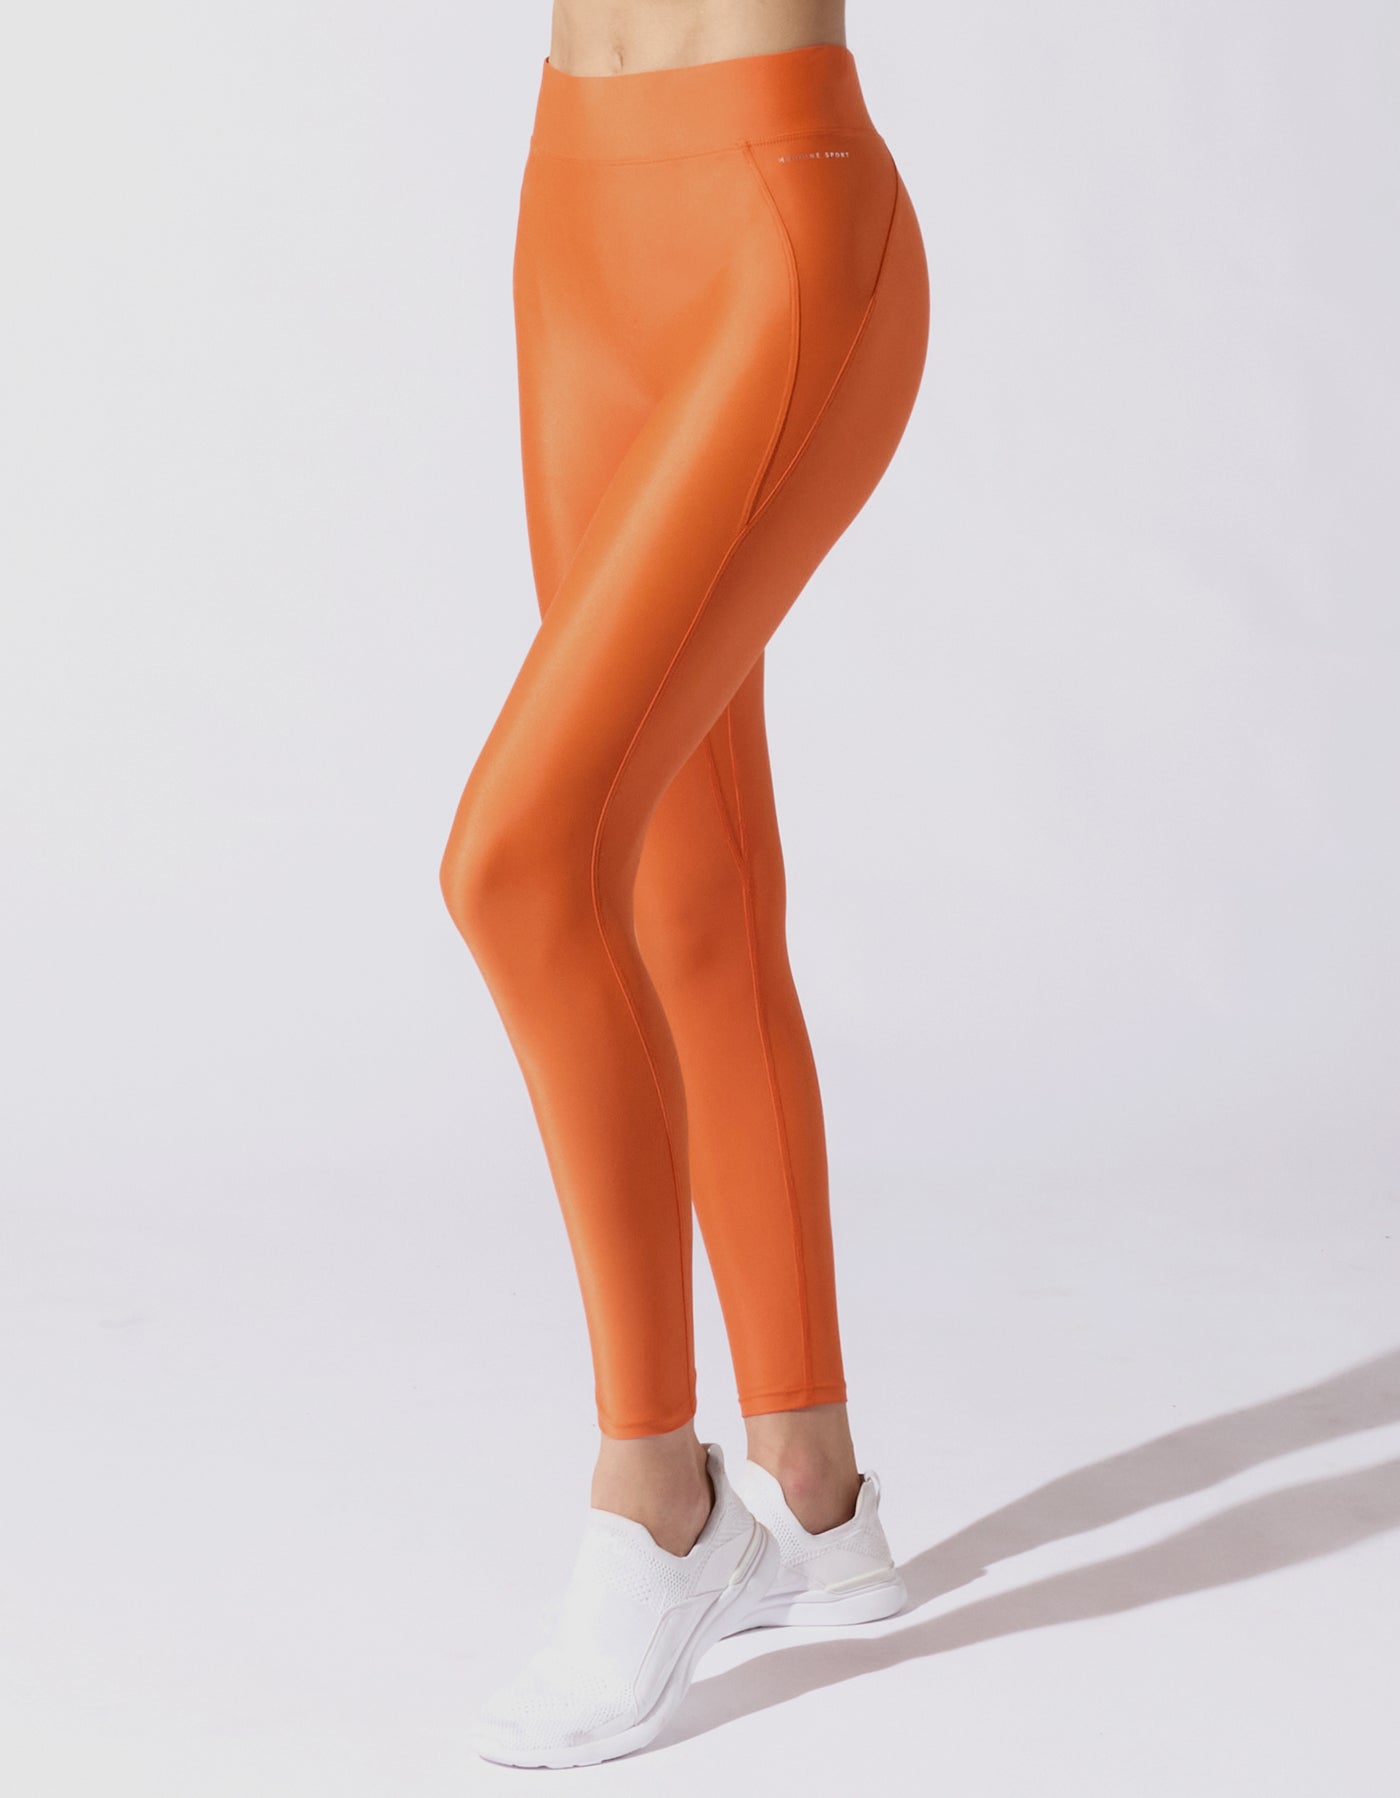 Buy Tangerine Cotton Lycra Solid Leggings (Leggings) for N/A0.0